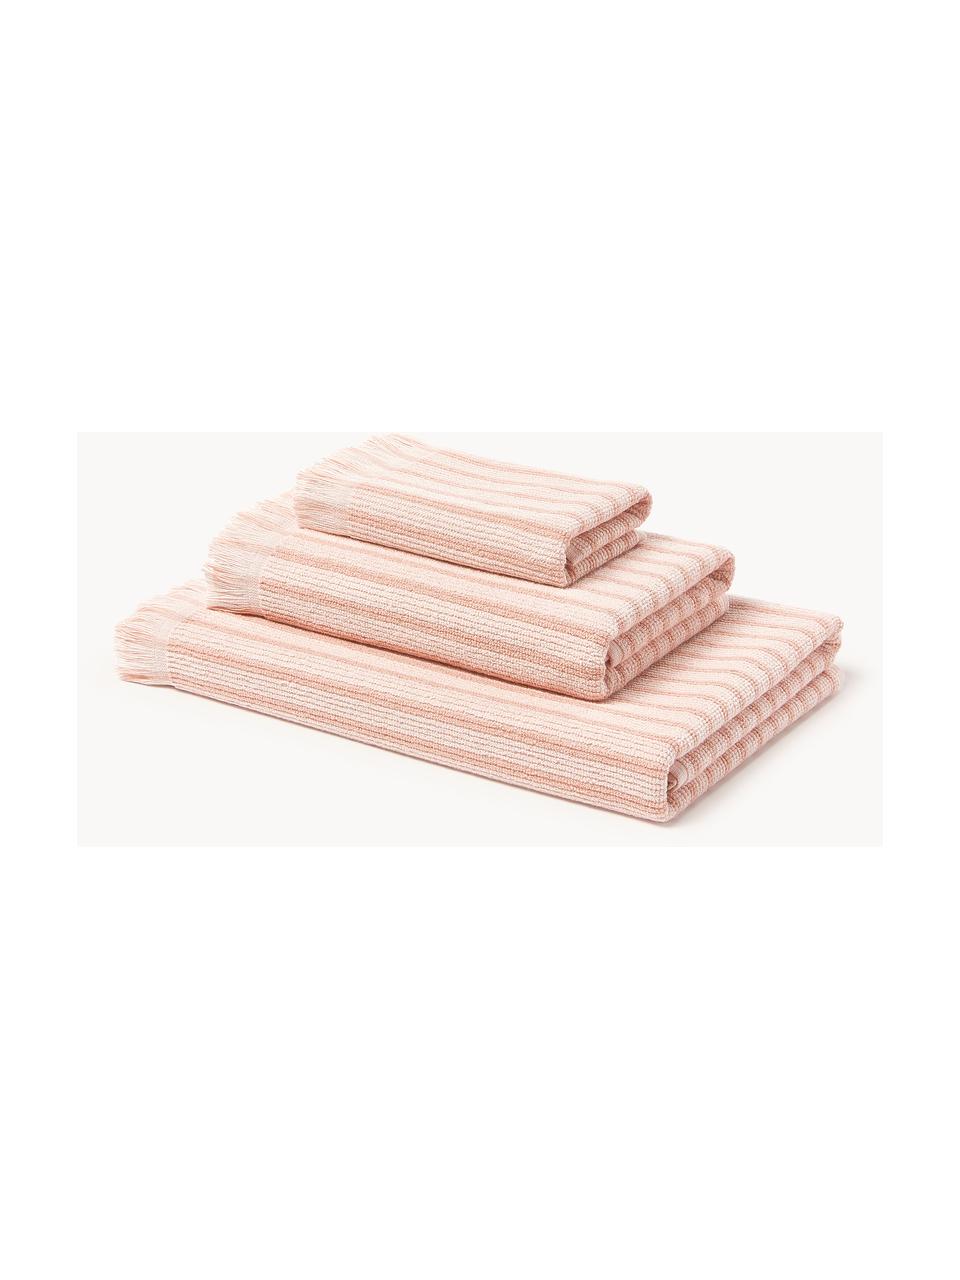 Set de toallas Irma, tamaños diferentes, Rosa claro, Set de 4 (toallas lavabo y toallas ducha)